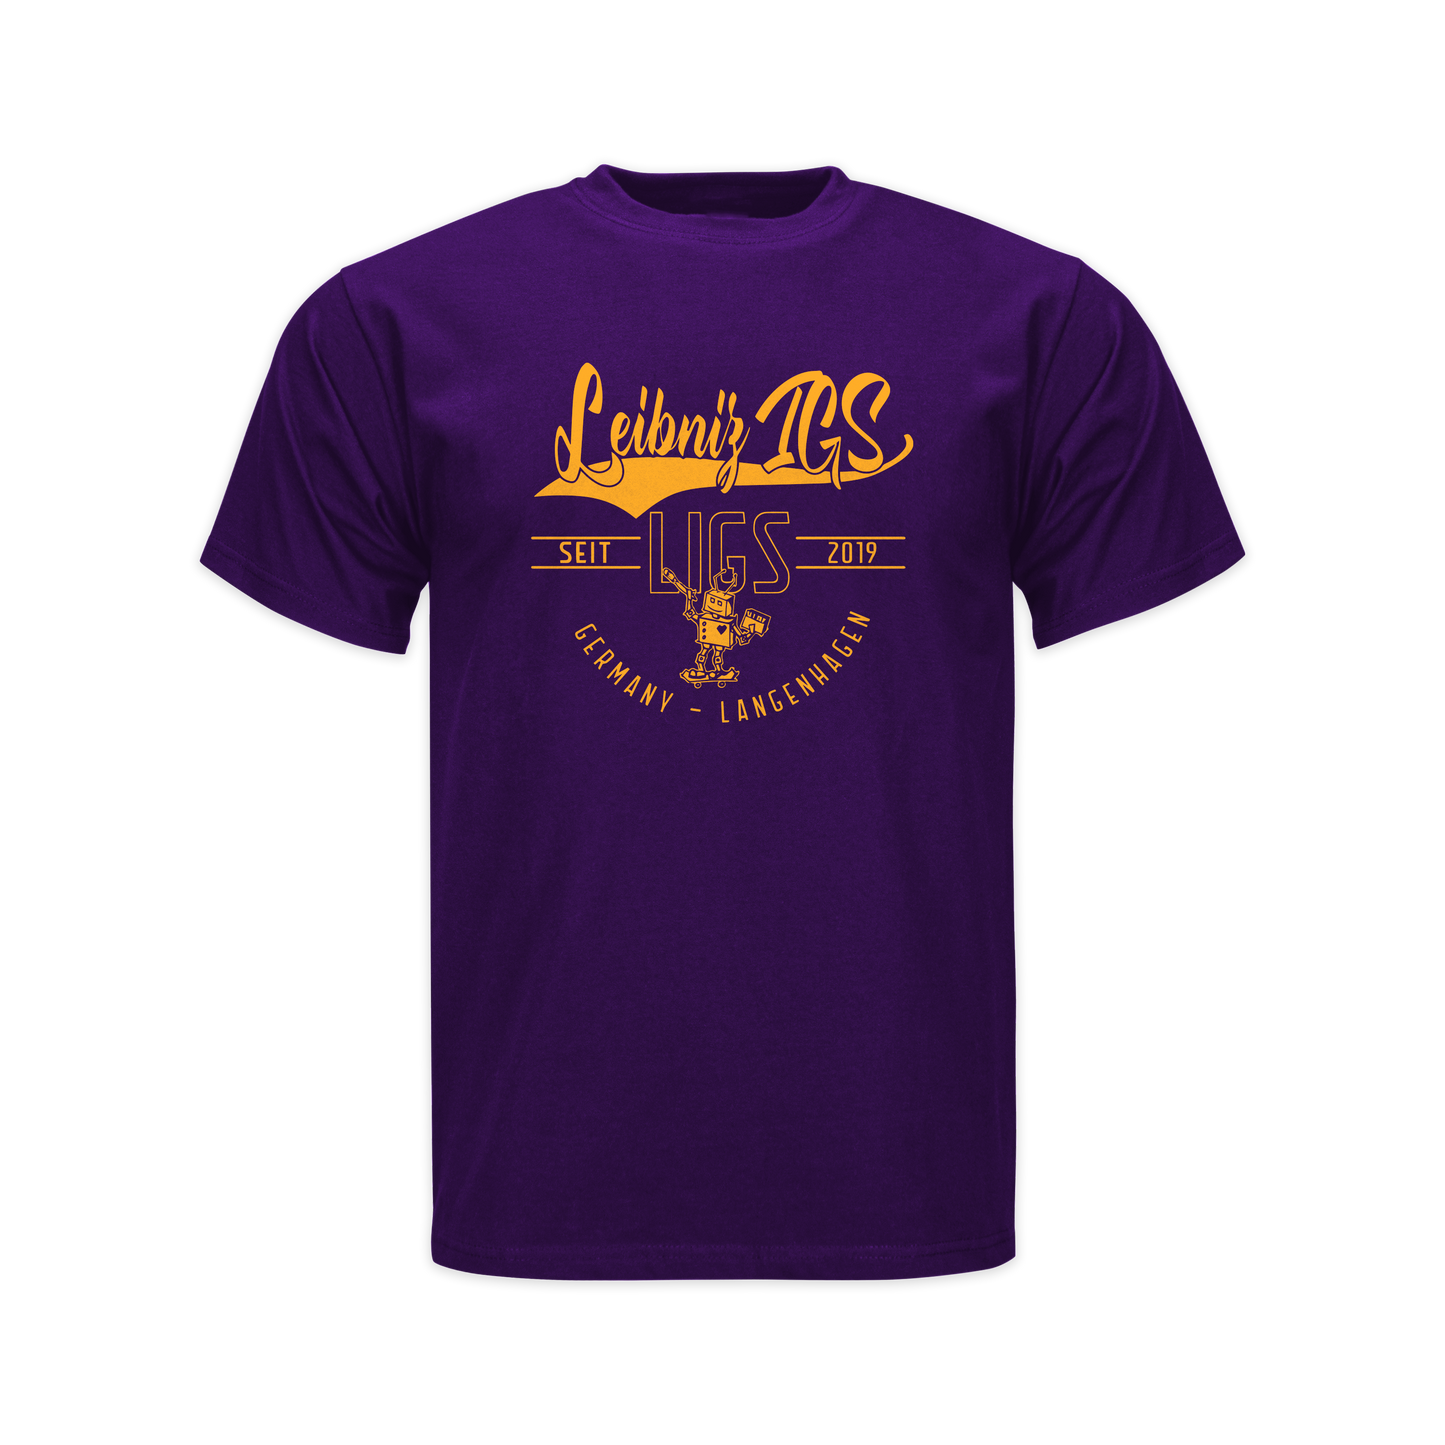 "Leibniz IGS" T-Shirt purple edit.